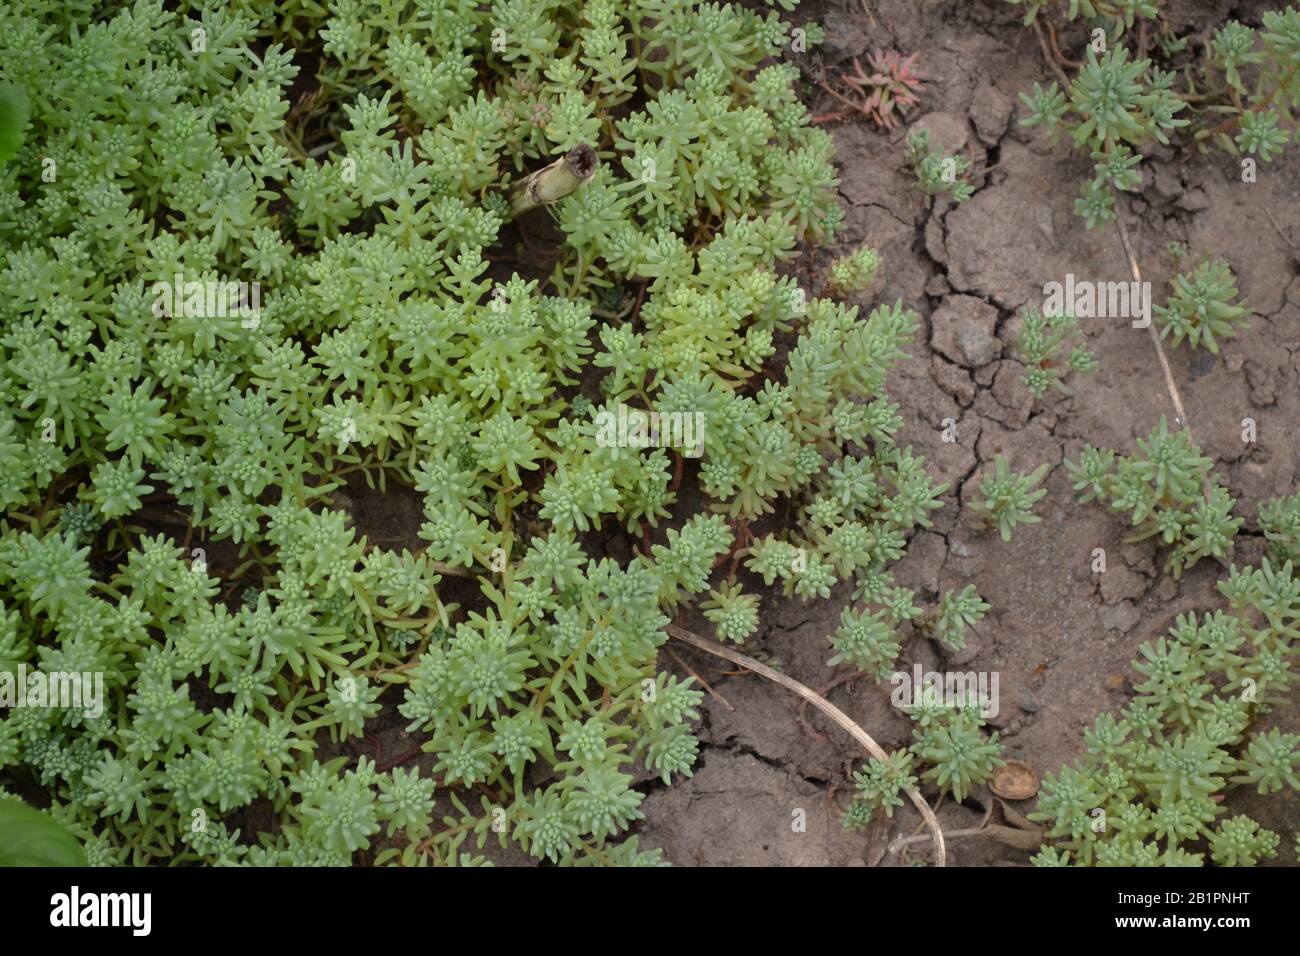 Stonecrop. Hare cabbage. Sedum. Green moss. Decorative grassy carpet. Horizontal photo Stock Photo